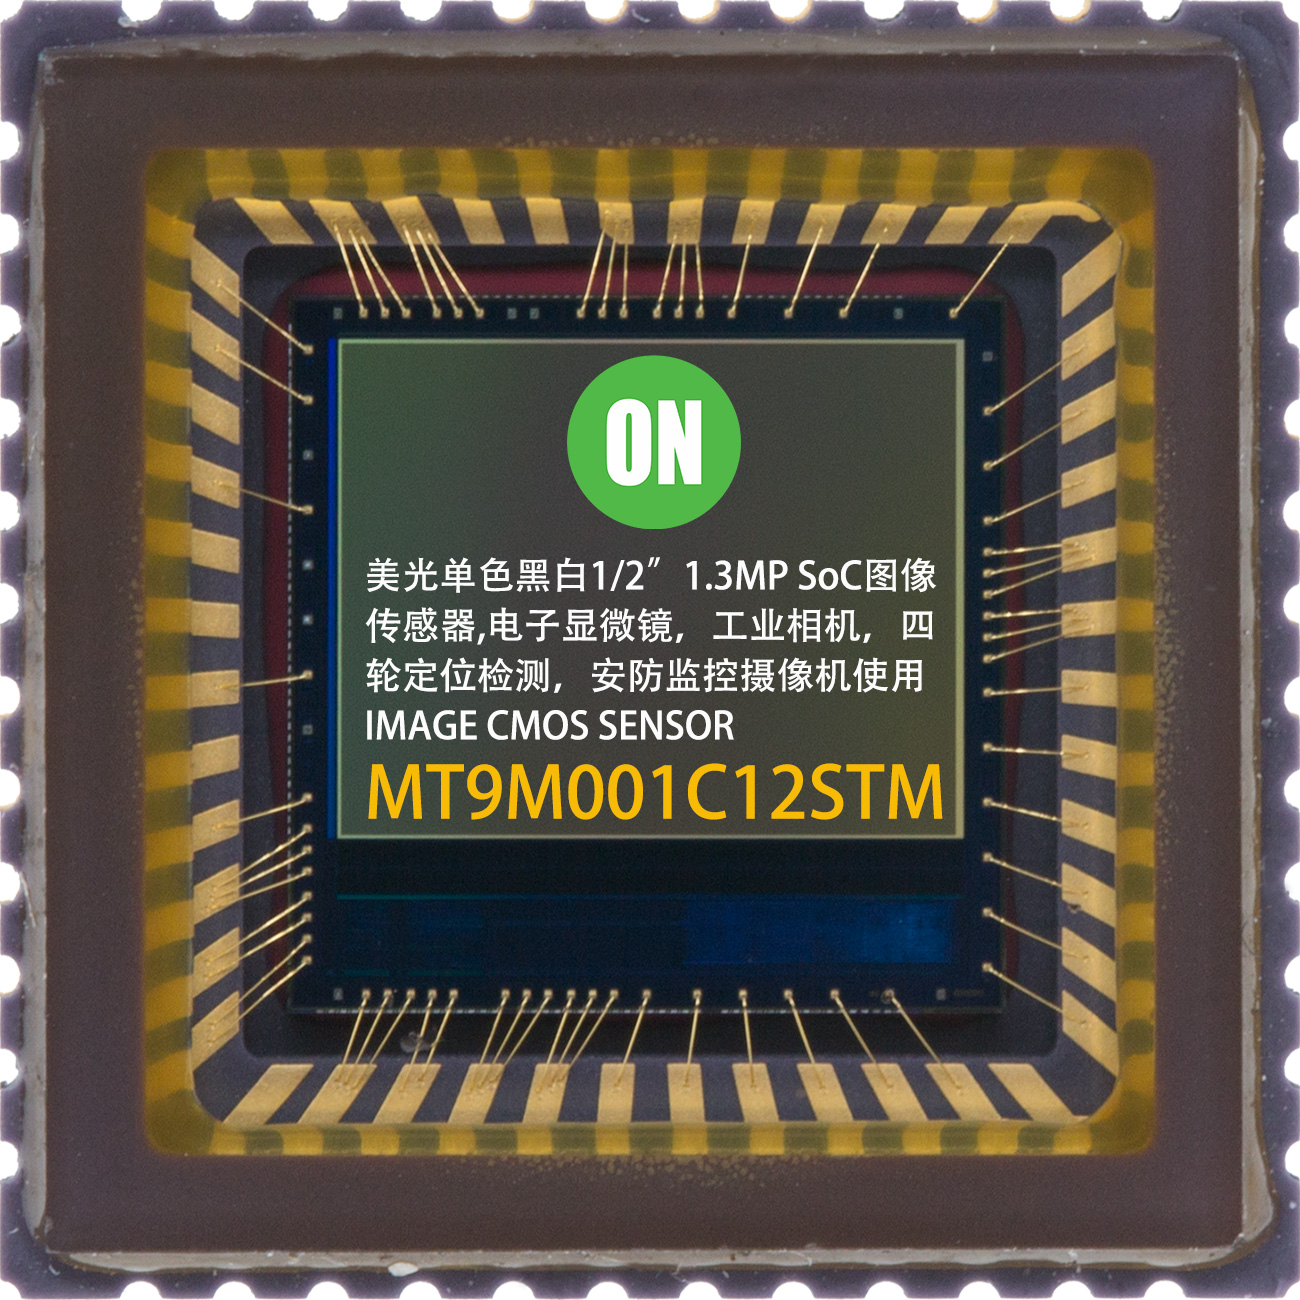 MT9M001C12STM ，APTINA 1.3MP SoC sensor，1/2-inch B/W , MONOCHROME sensor，1.3MP 1/2 IMAGE ,MICRON ONSEMI APTINA CMOS, INDUSTRIAL CAMERA SENSOR, Arducam mono camera module，Microsoft Kinect XBOS 360 monochrome image sensor，scanner mono sensor